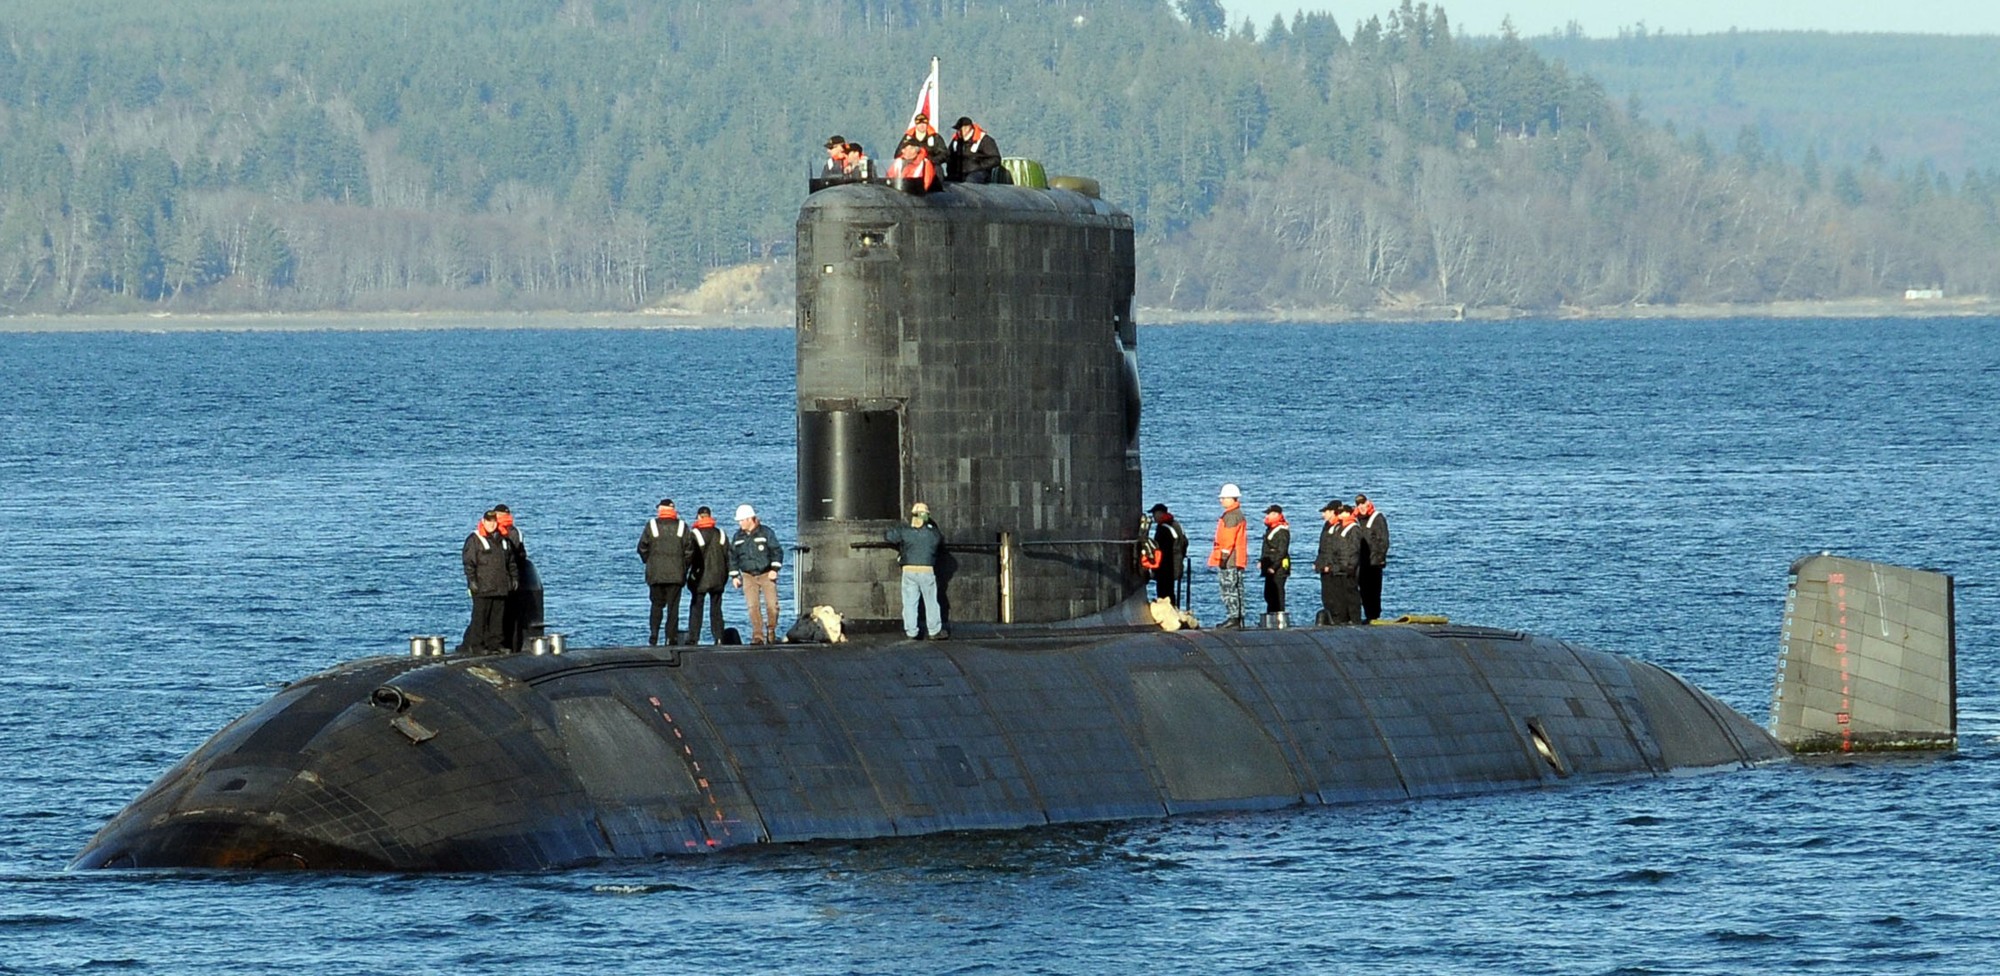 ssk-876 hmcs victoria upholder class attack submarine hunter killer ncsm royal canadian navy 04